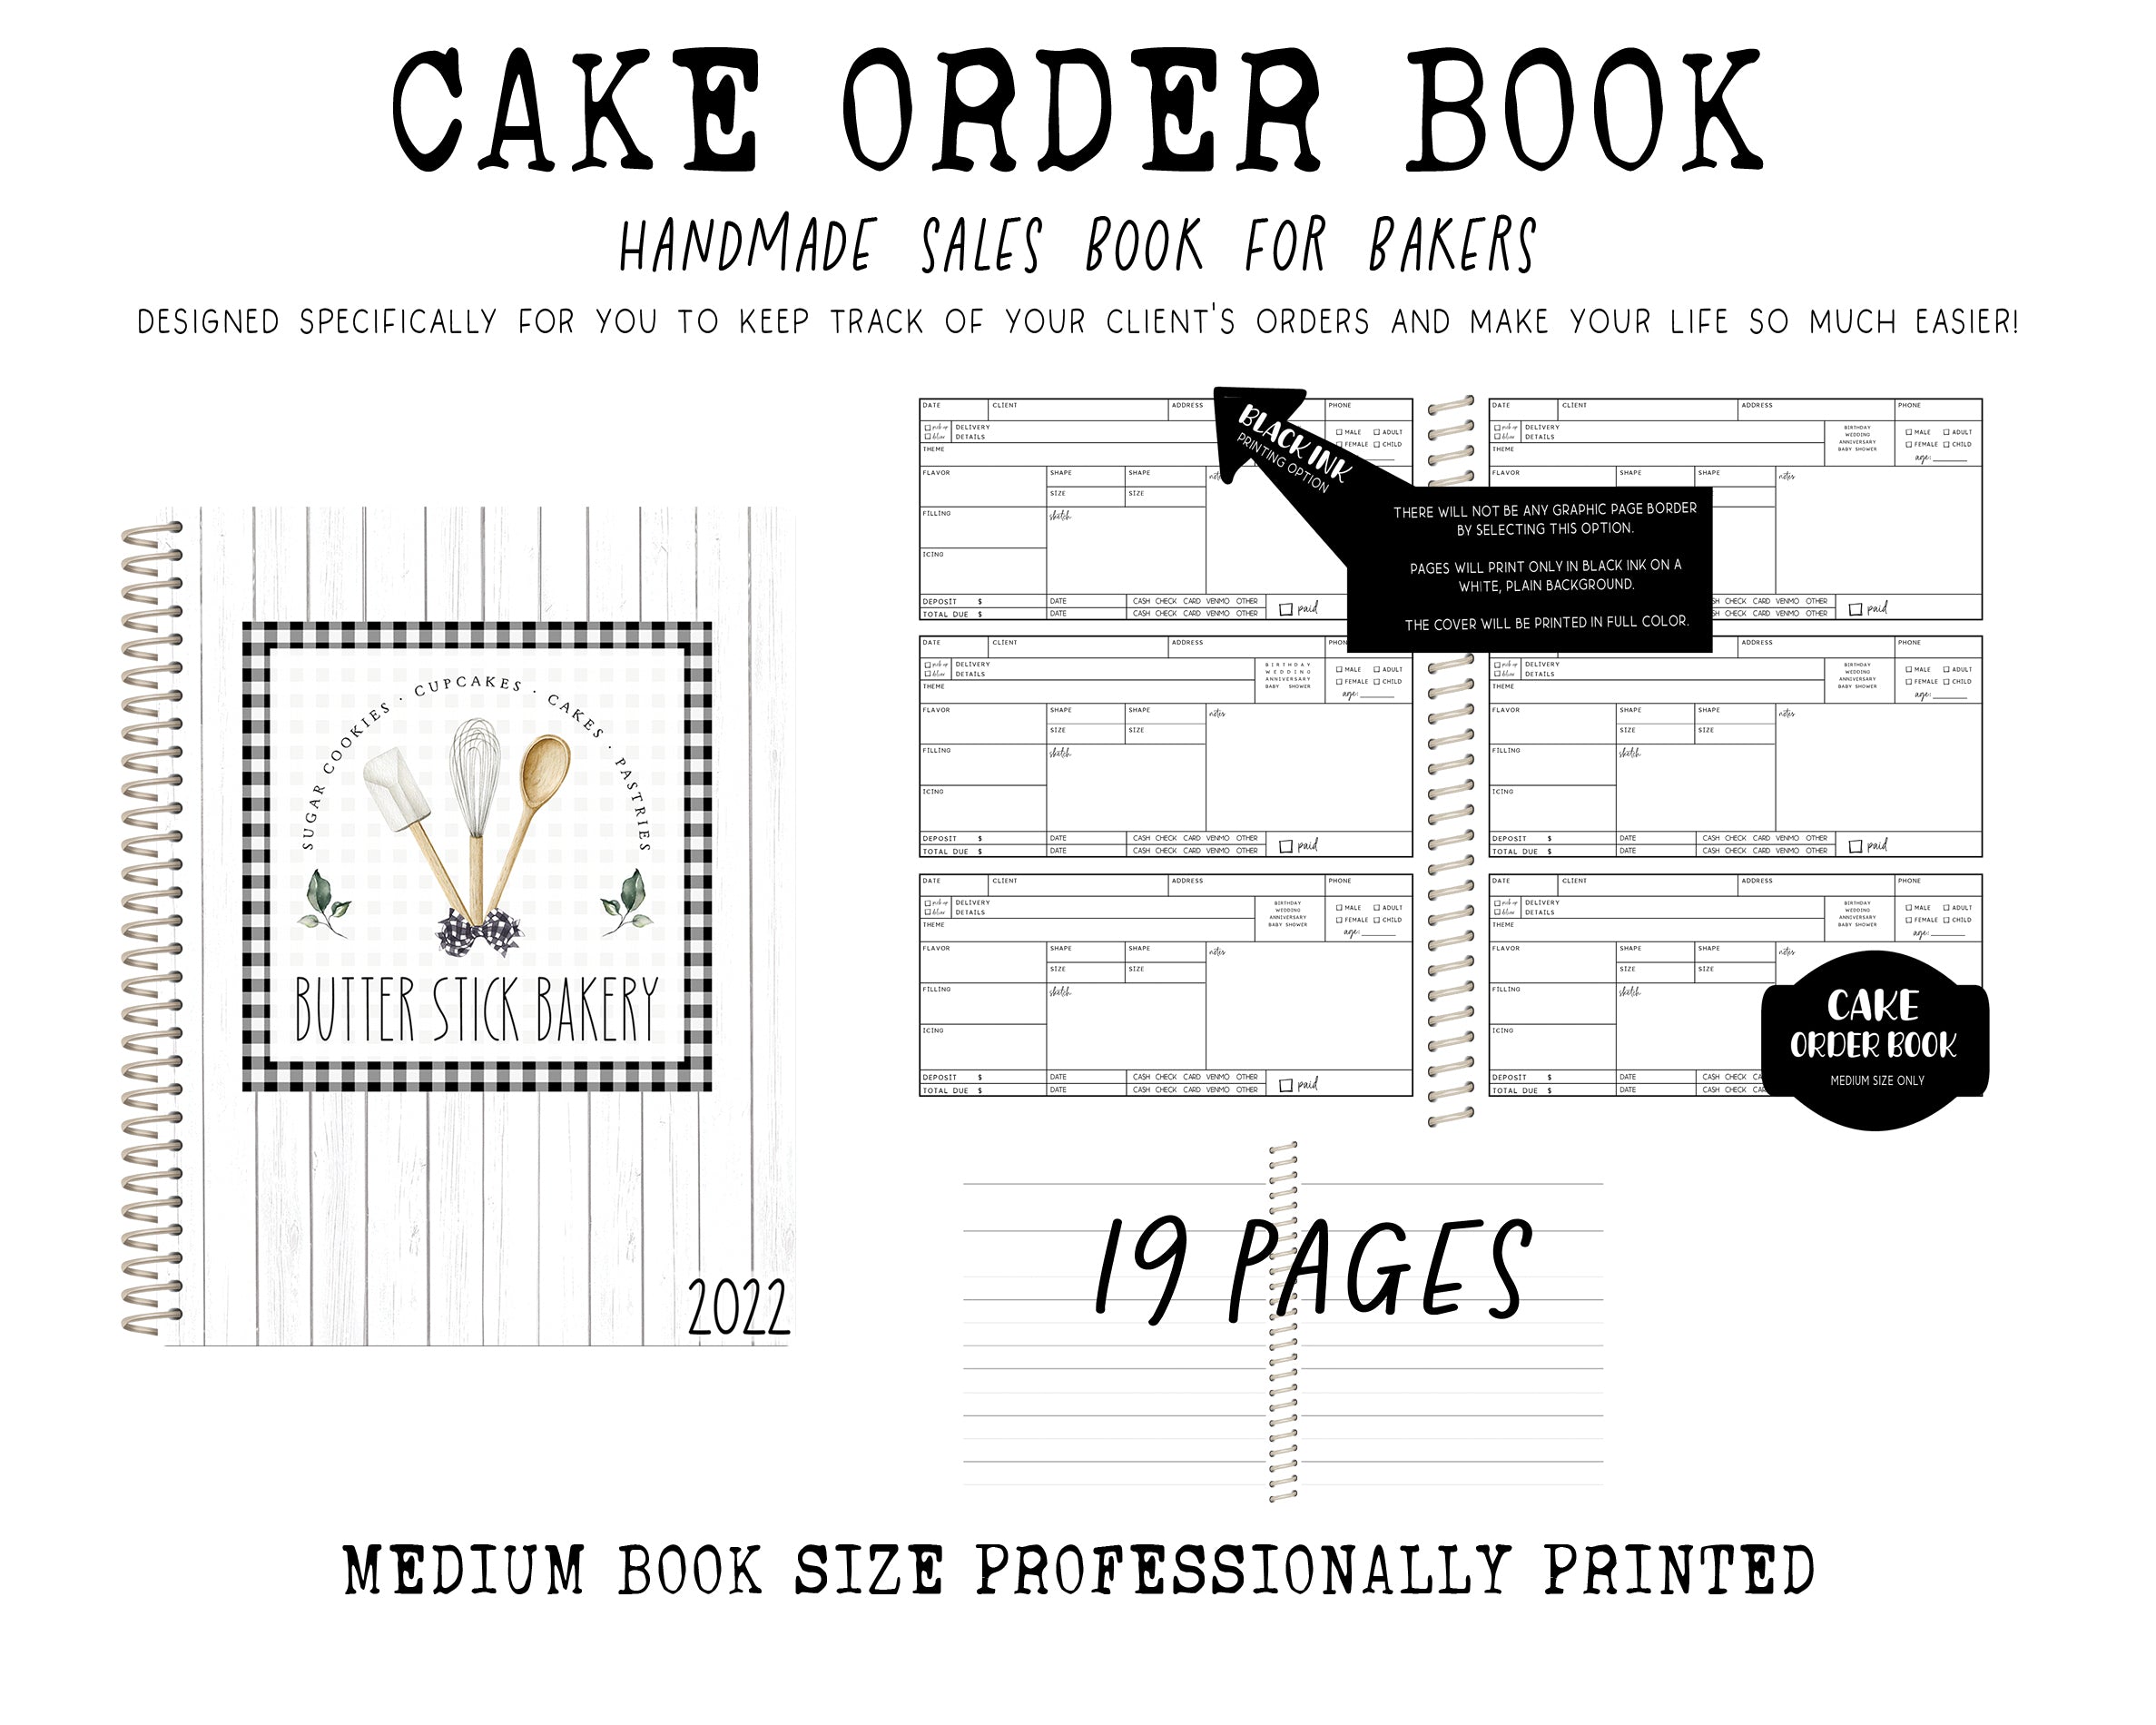 Cake Order Book - BW BUFFALO PLAID